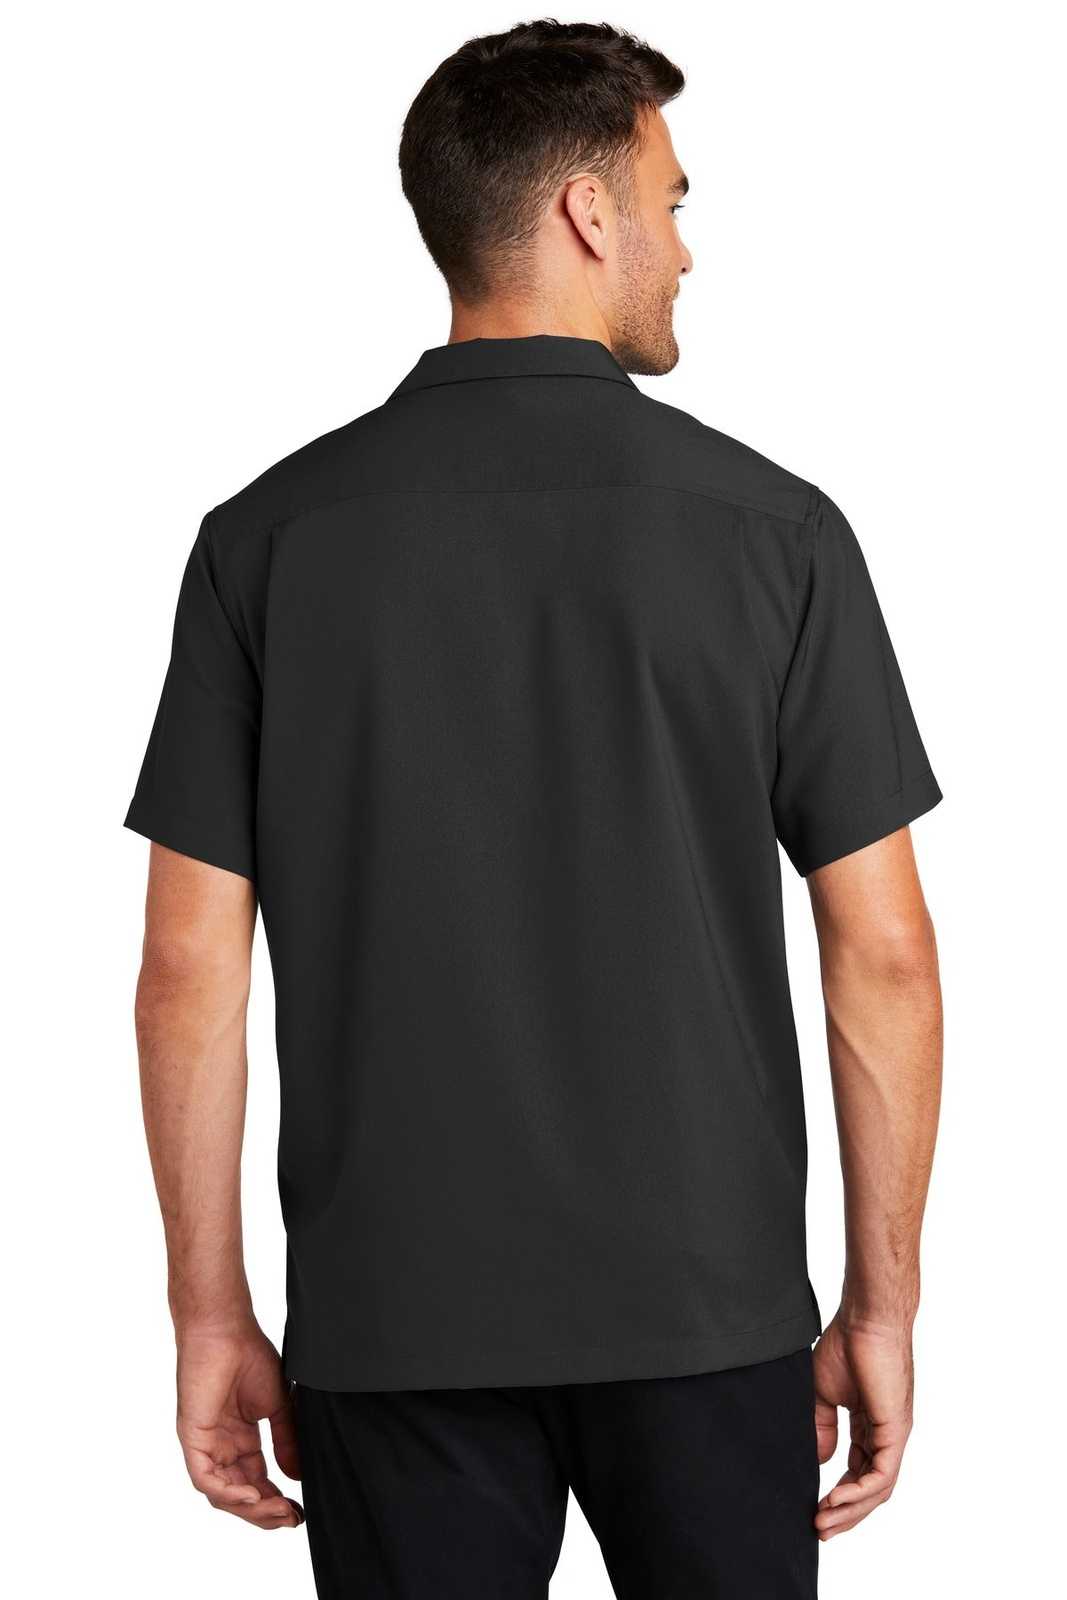 Port Authority W400 Short Sleeve Performance Staff Shirt - Black - HIT a Double - 2